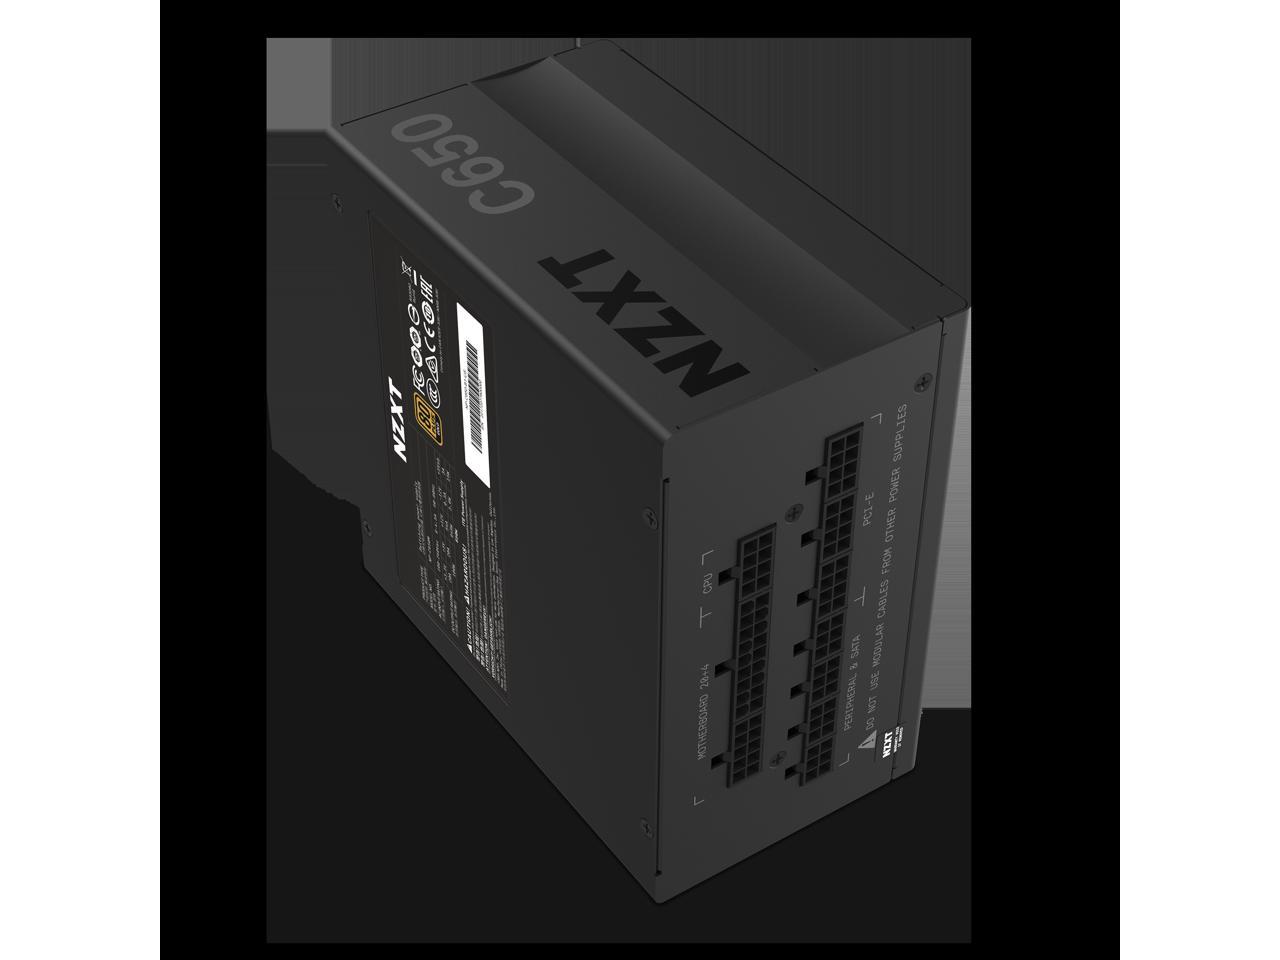 NZXT C650 NP-C650M 650 Watt PSU 80+ Gold Certified Hybrid Silent Fan Control Fluid Dynamic Bearings Modular Design Sleeved Cables ATX Gaming Power Supply, 10 Year Warranty